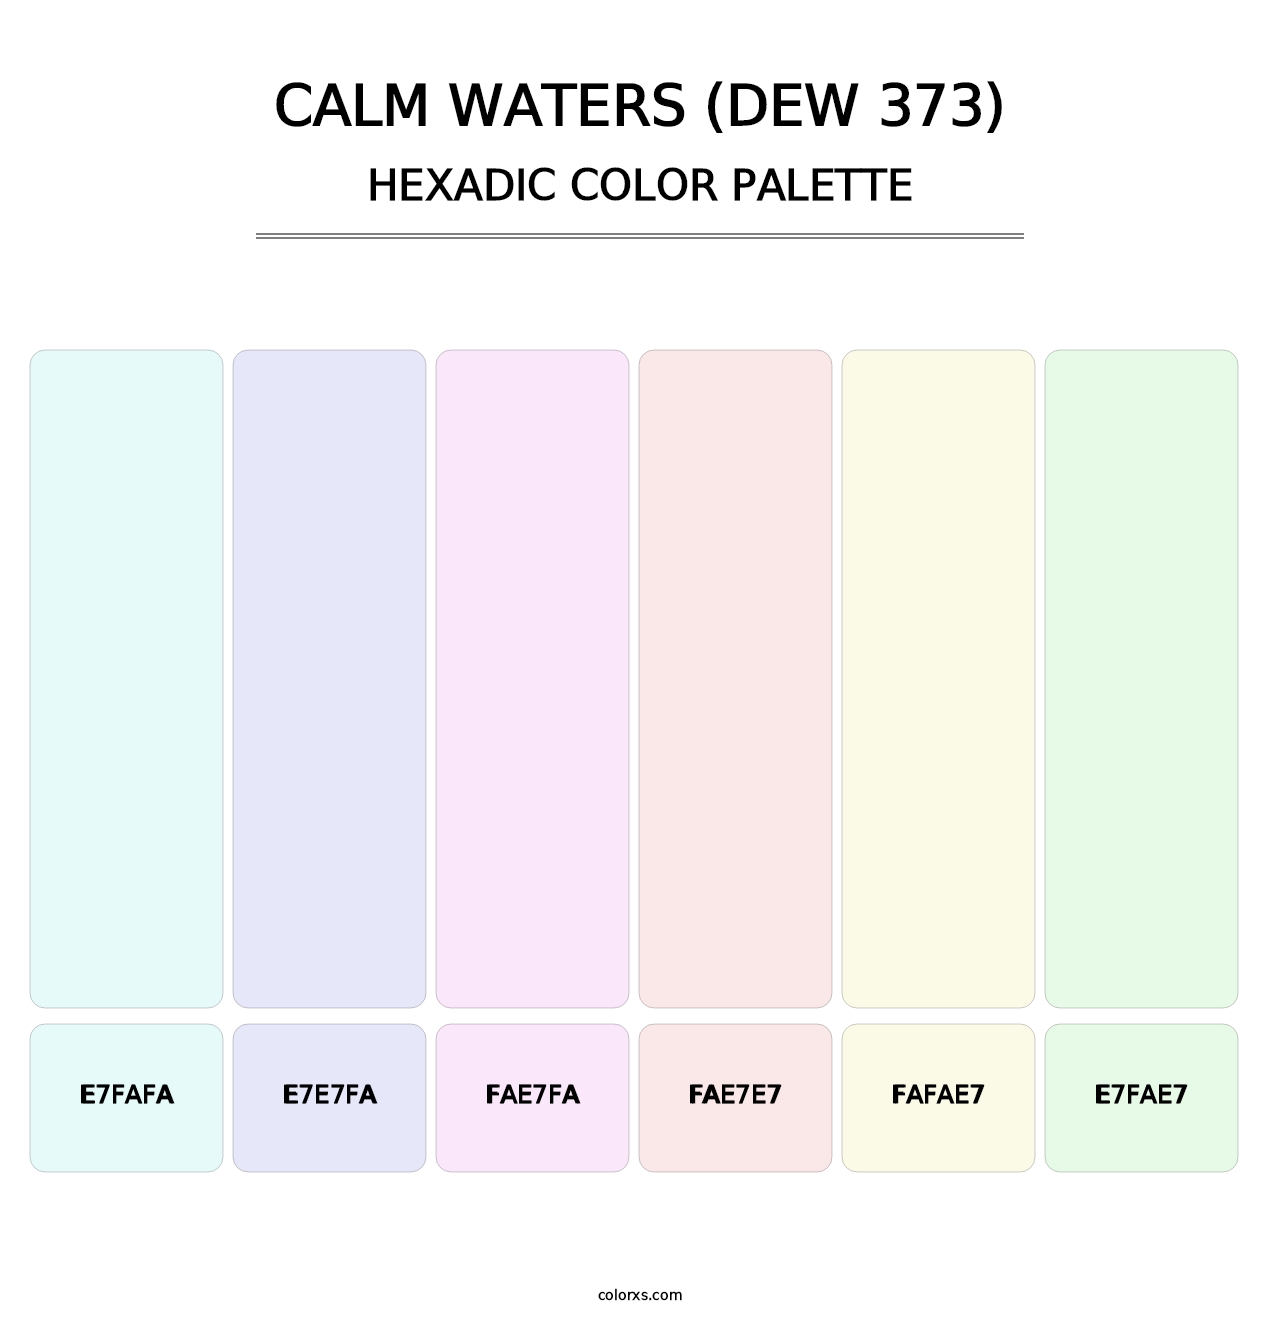 Calm Waters (DEW 373) - Hexadic Color Palette